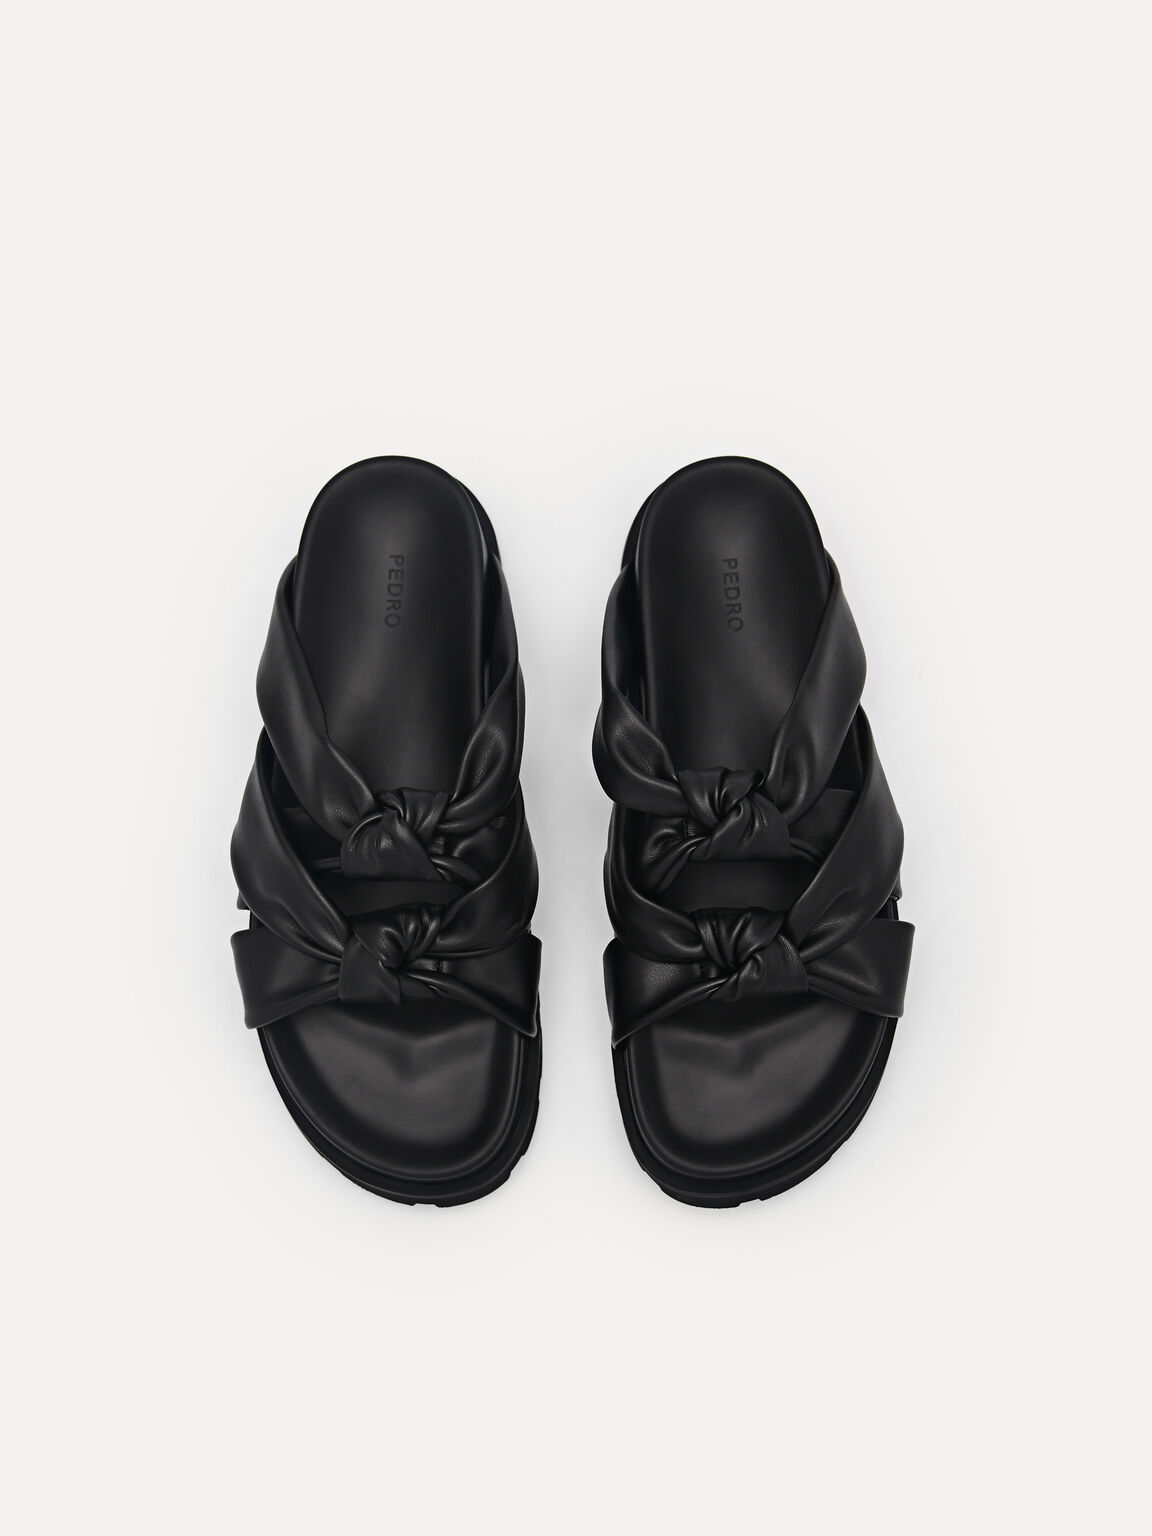 Celeste Knot Sandals, Black